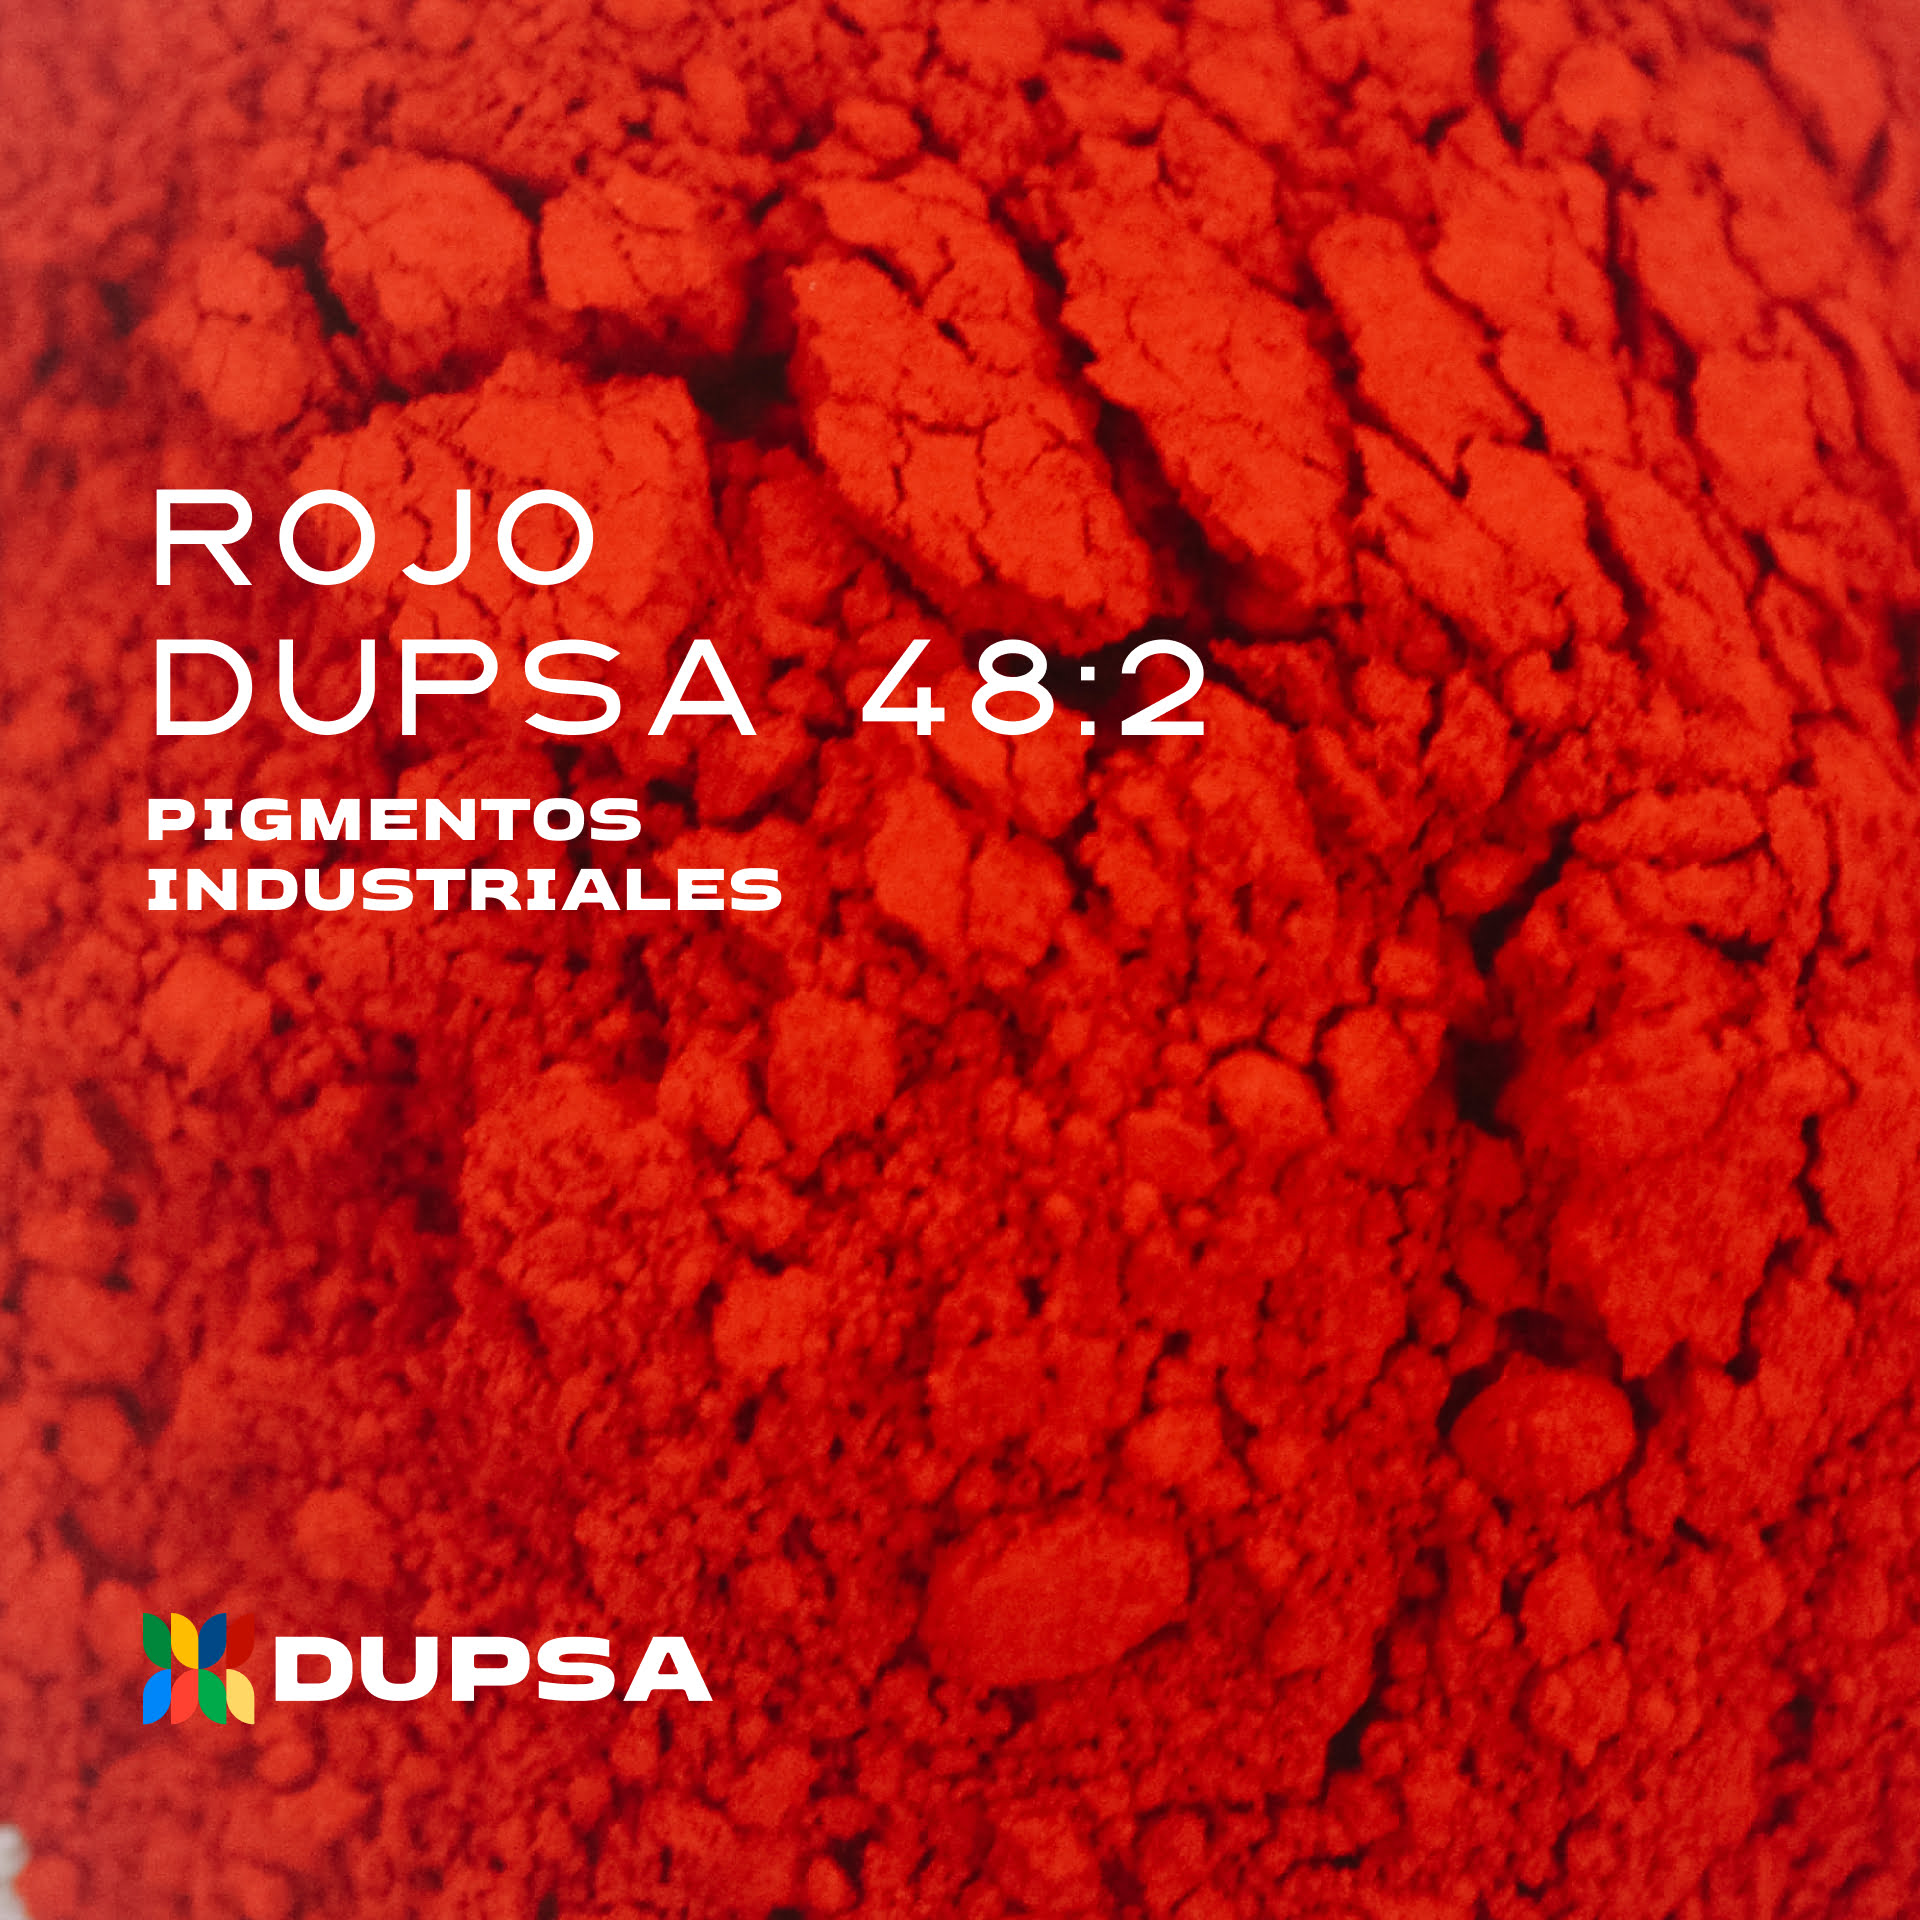 qd-ad-pigmentos- Rojo Dupsa 48_2